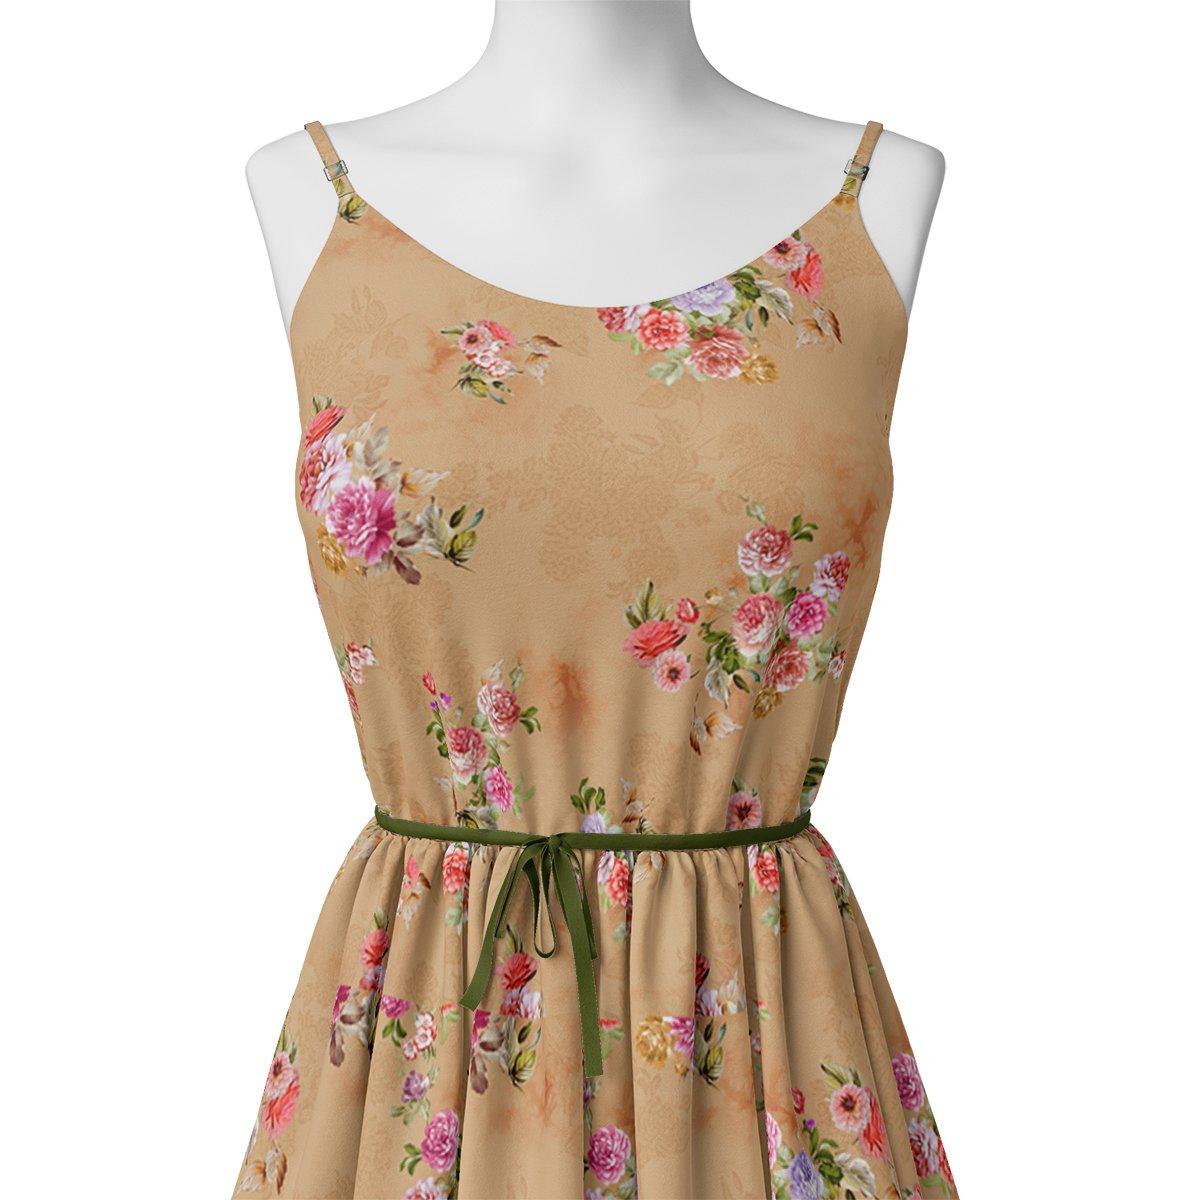 Chintz Pink Florish Flower Digital Printed Fabric - Kora Silk - FAB VOGUE Studio®